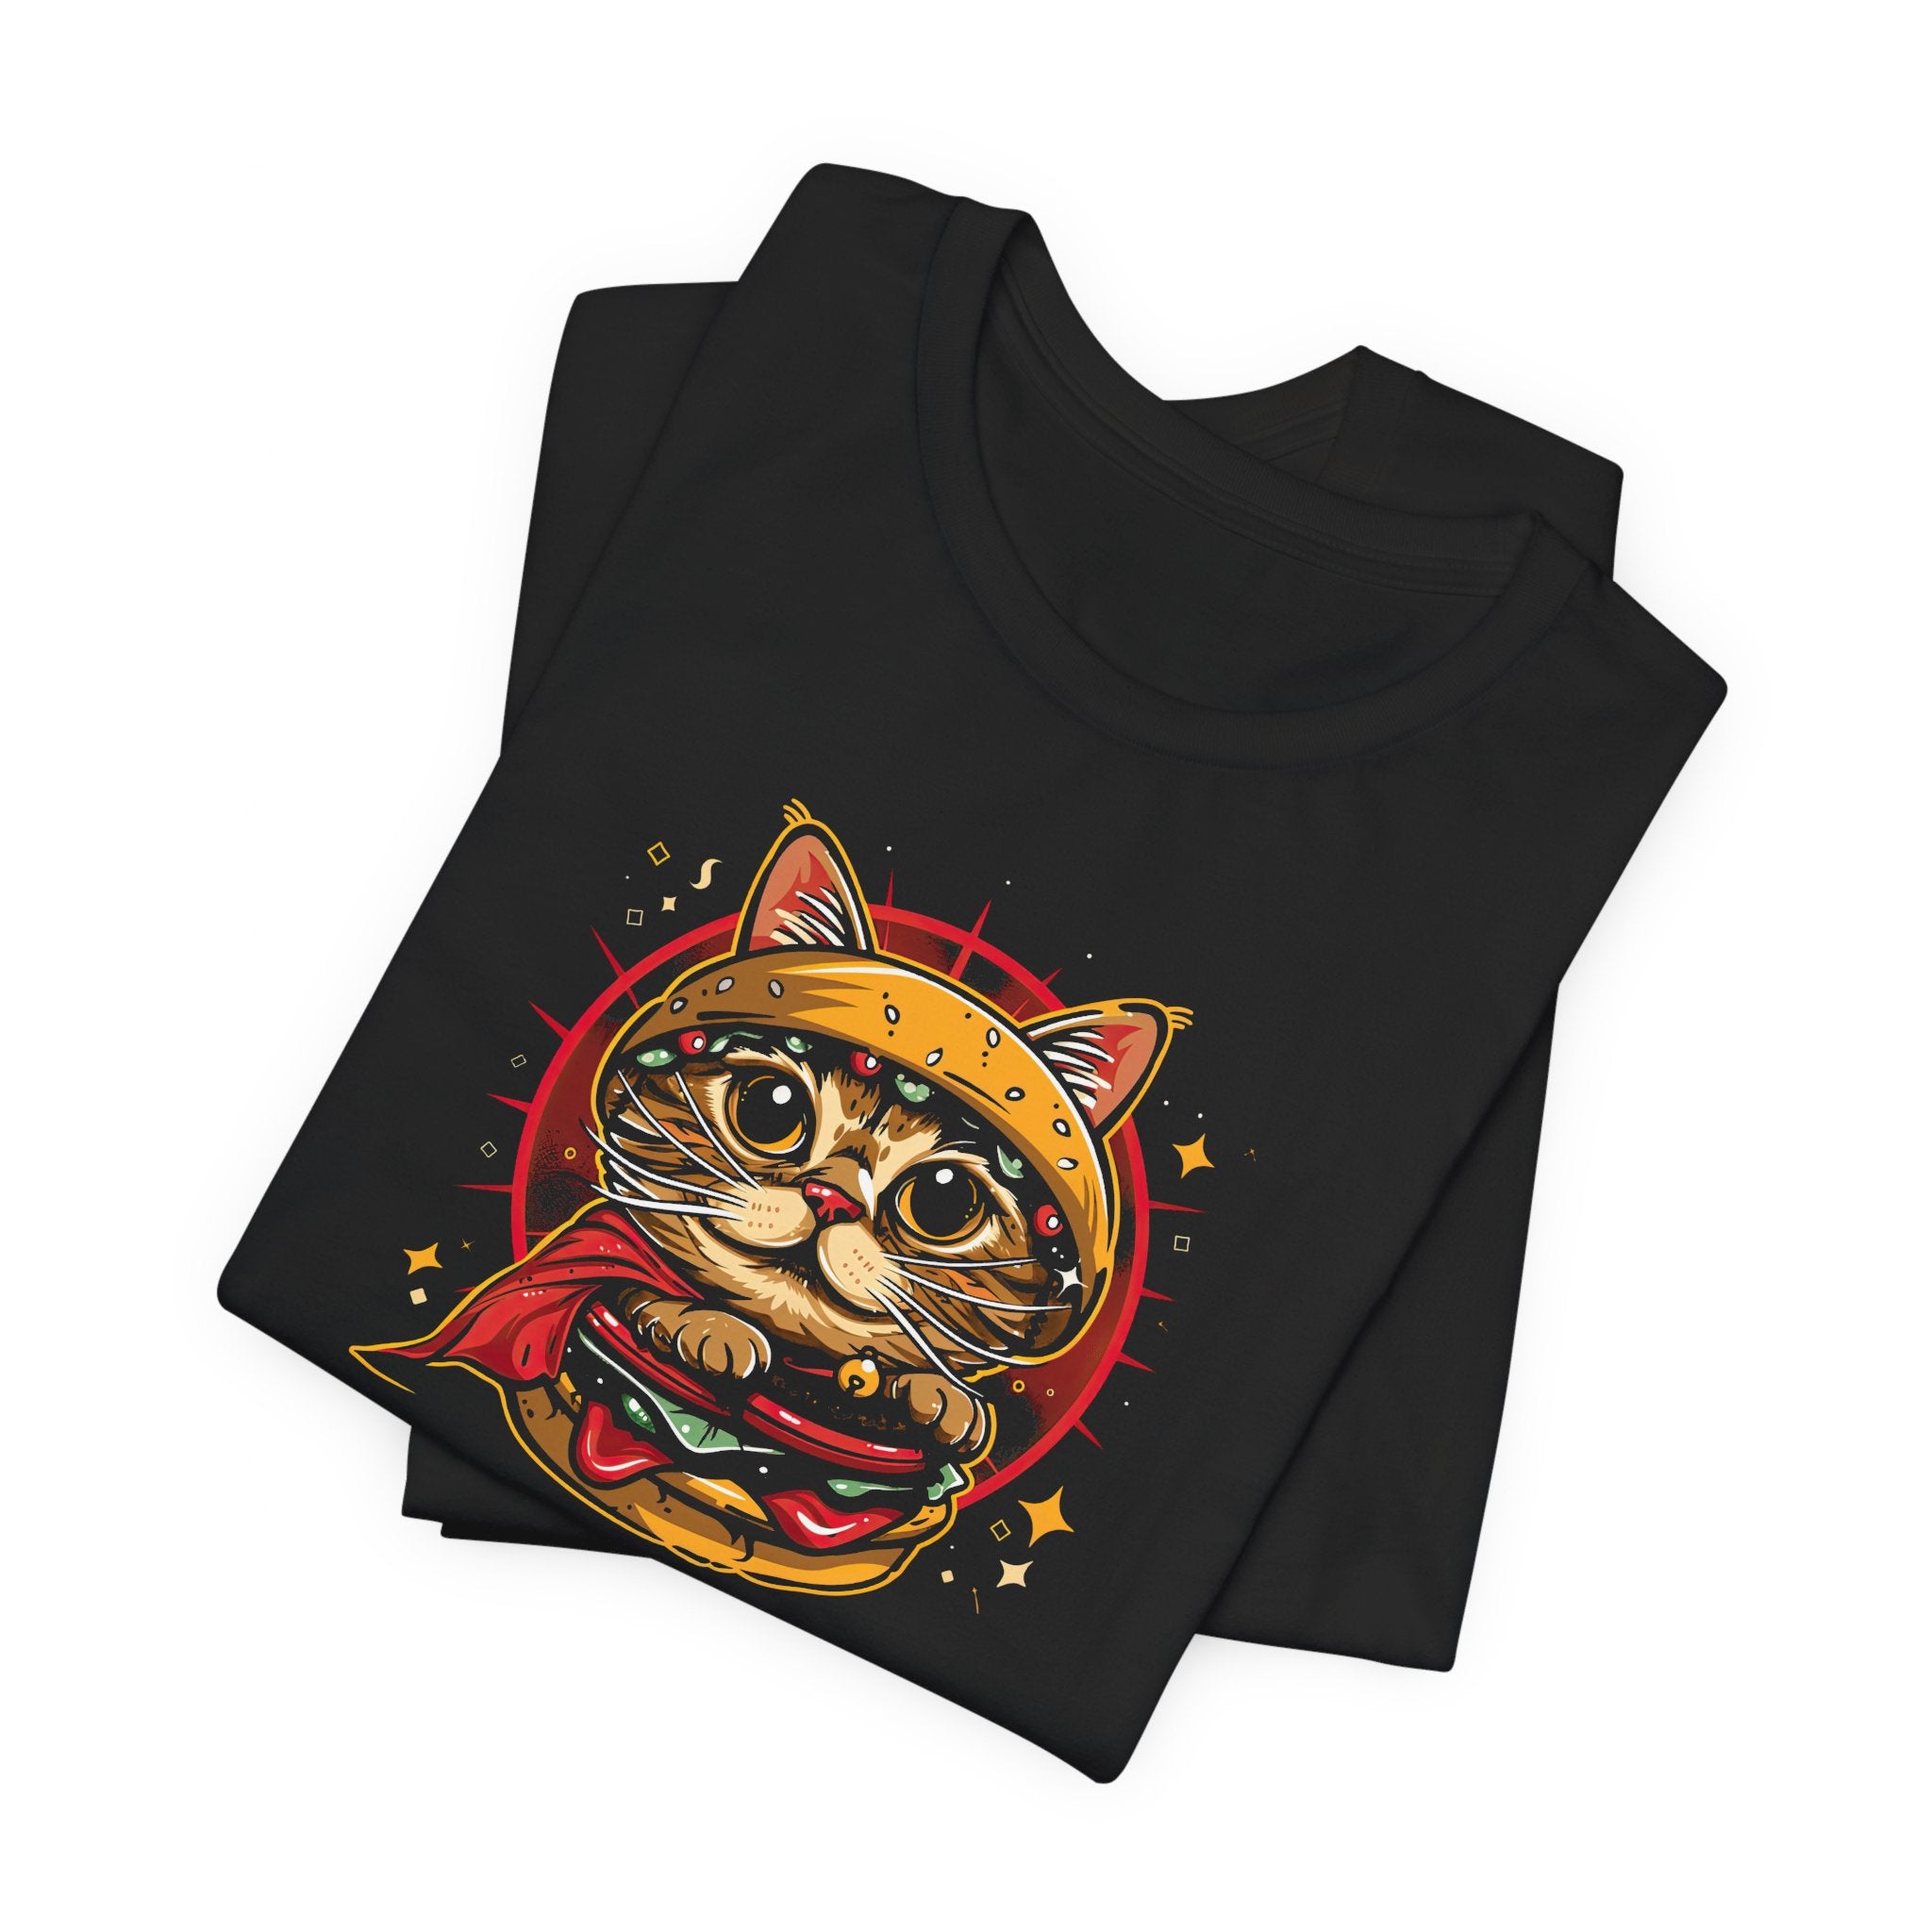 Hampurrger Cat T-Shirt - Cute Cat in a Burger Design